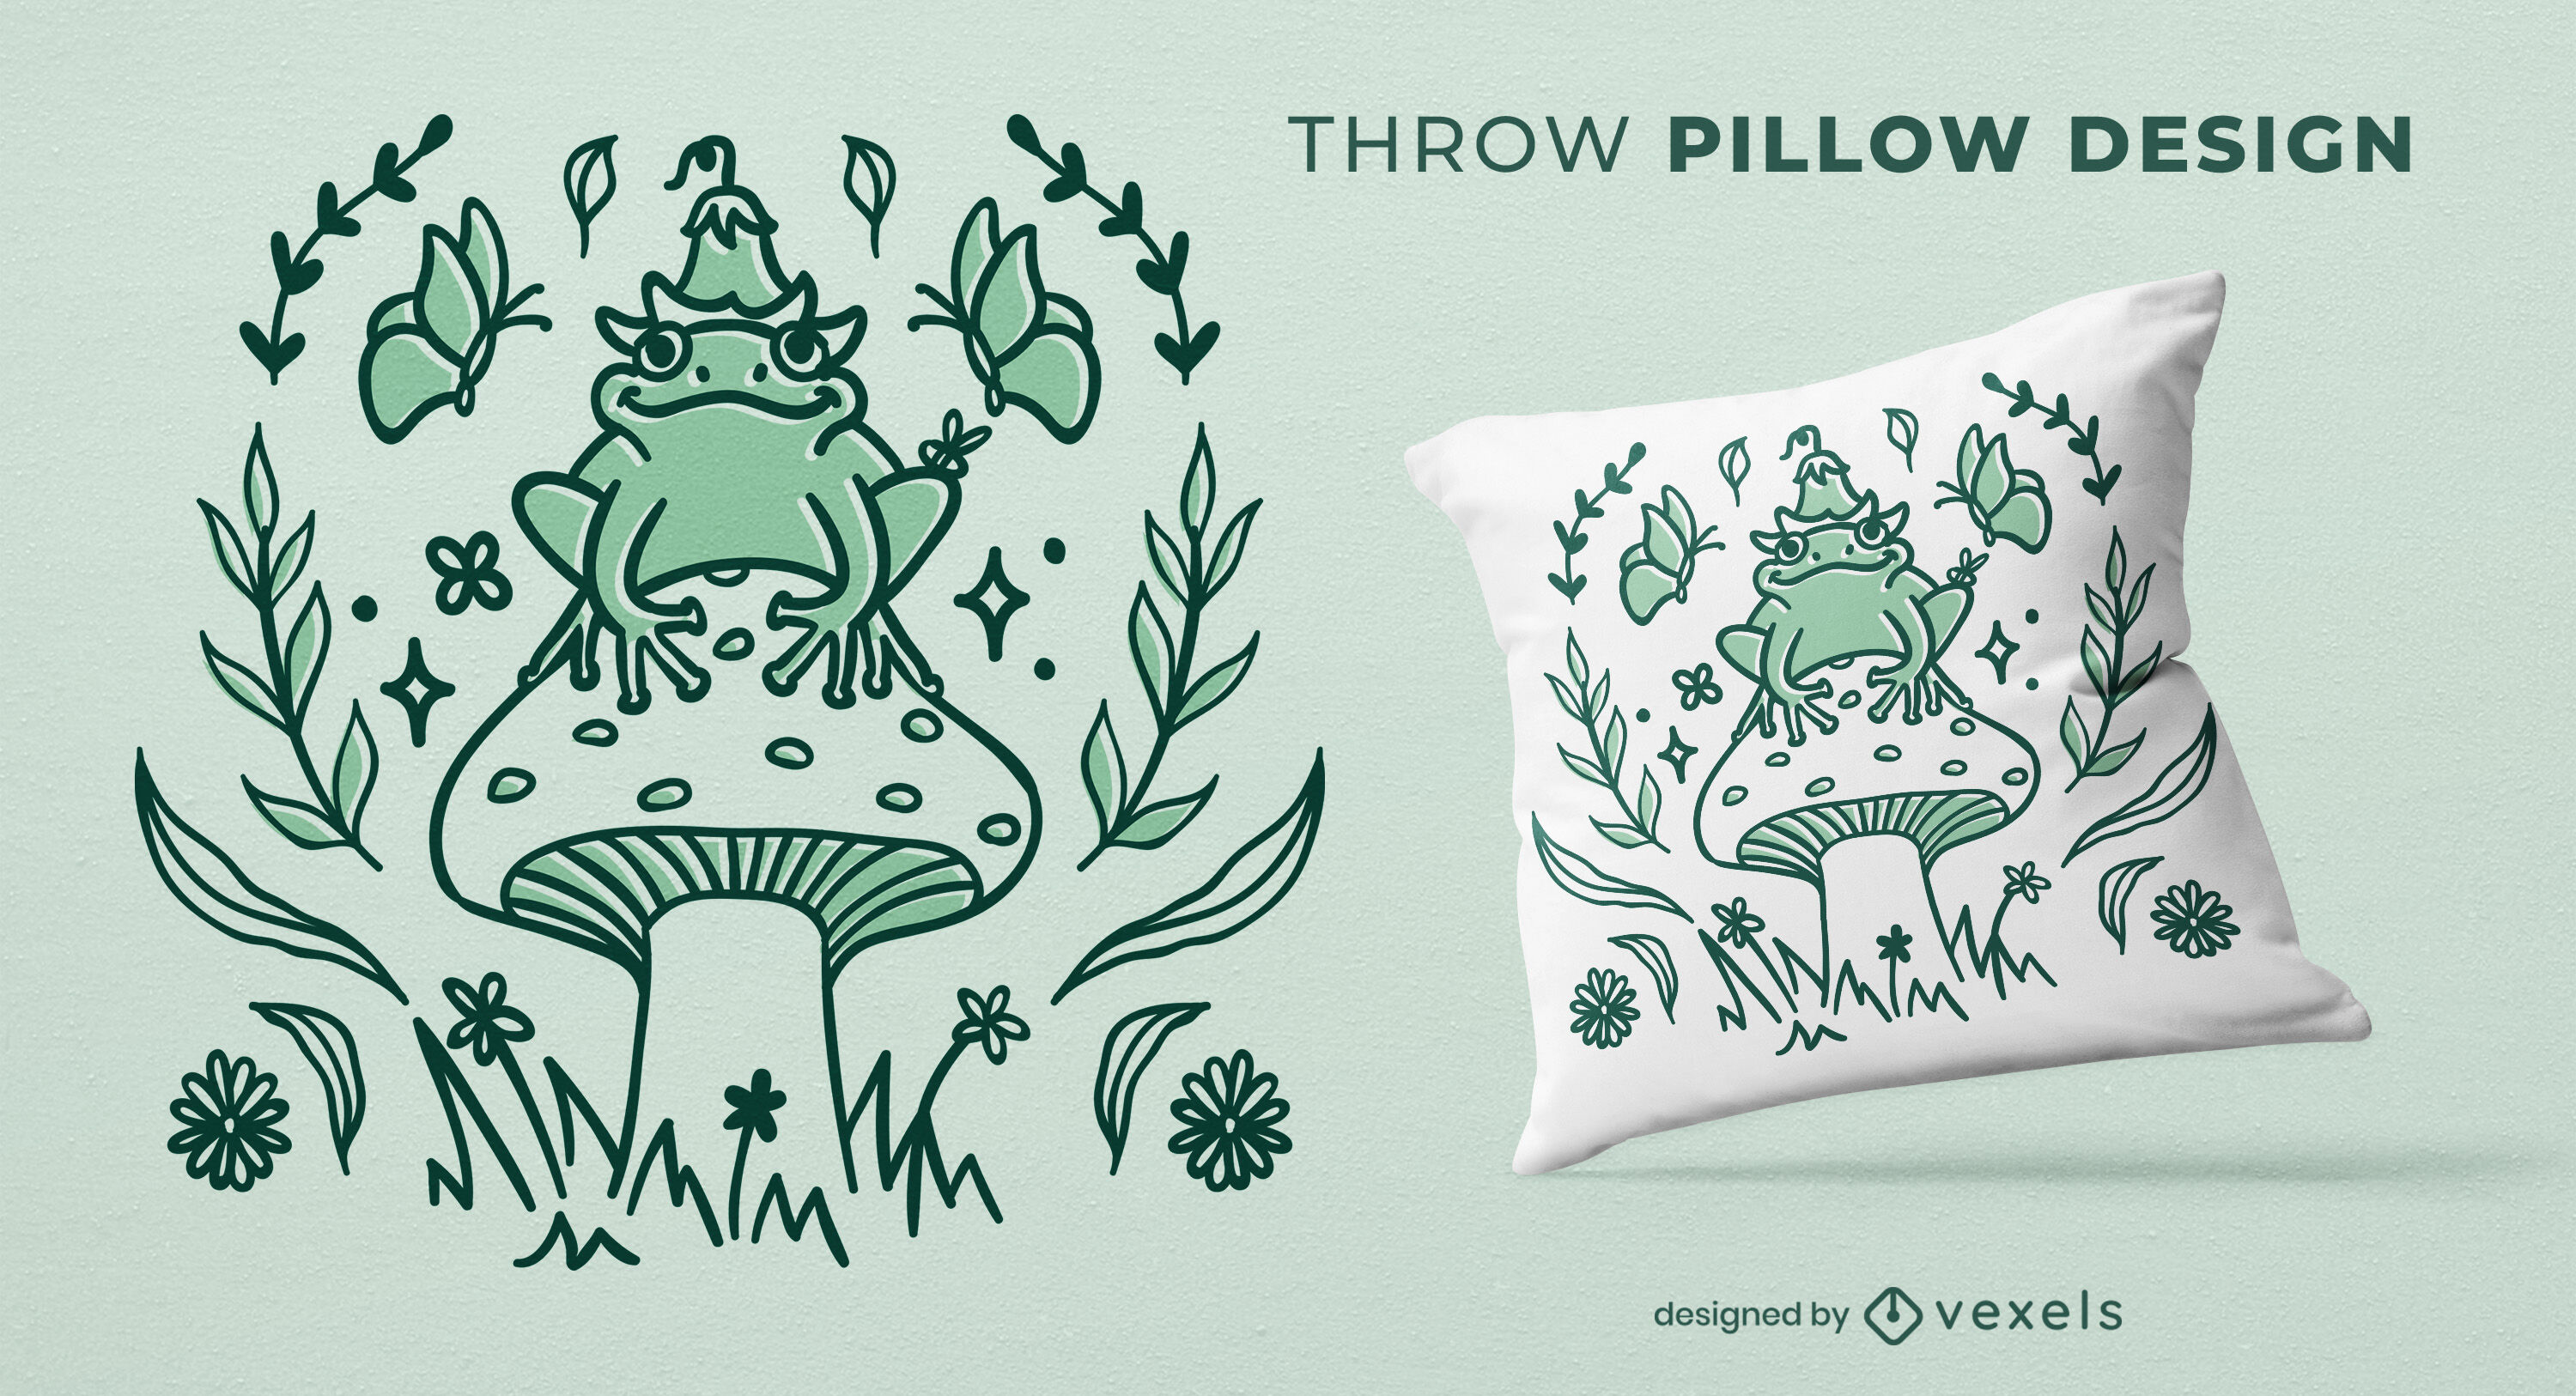 Frog king of the mushroom throw pillow design